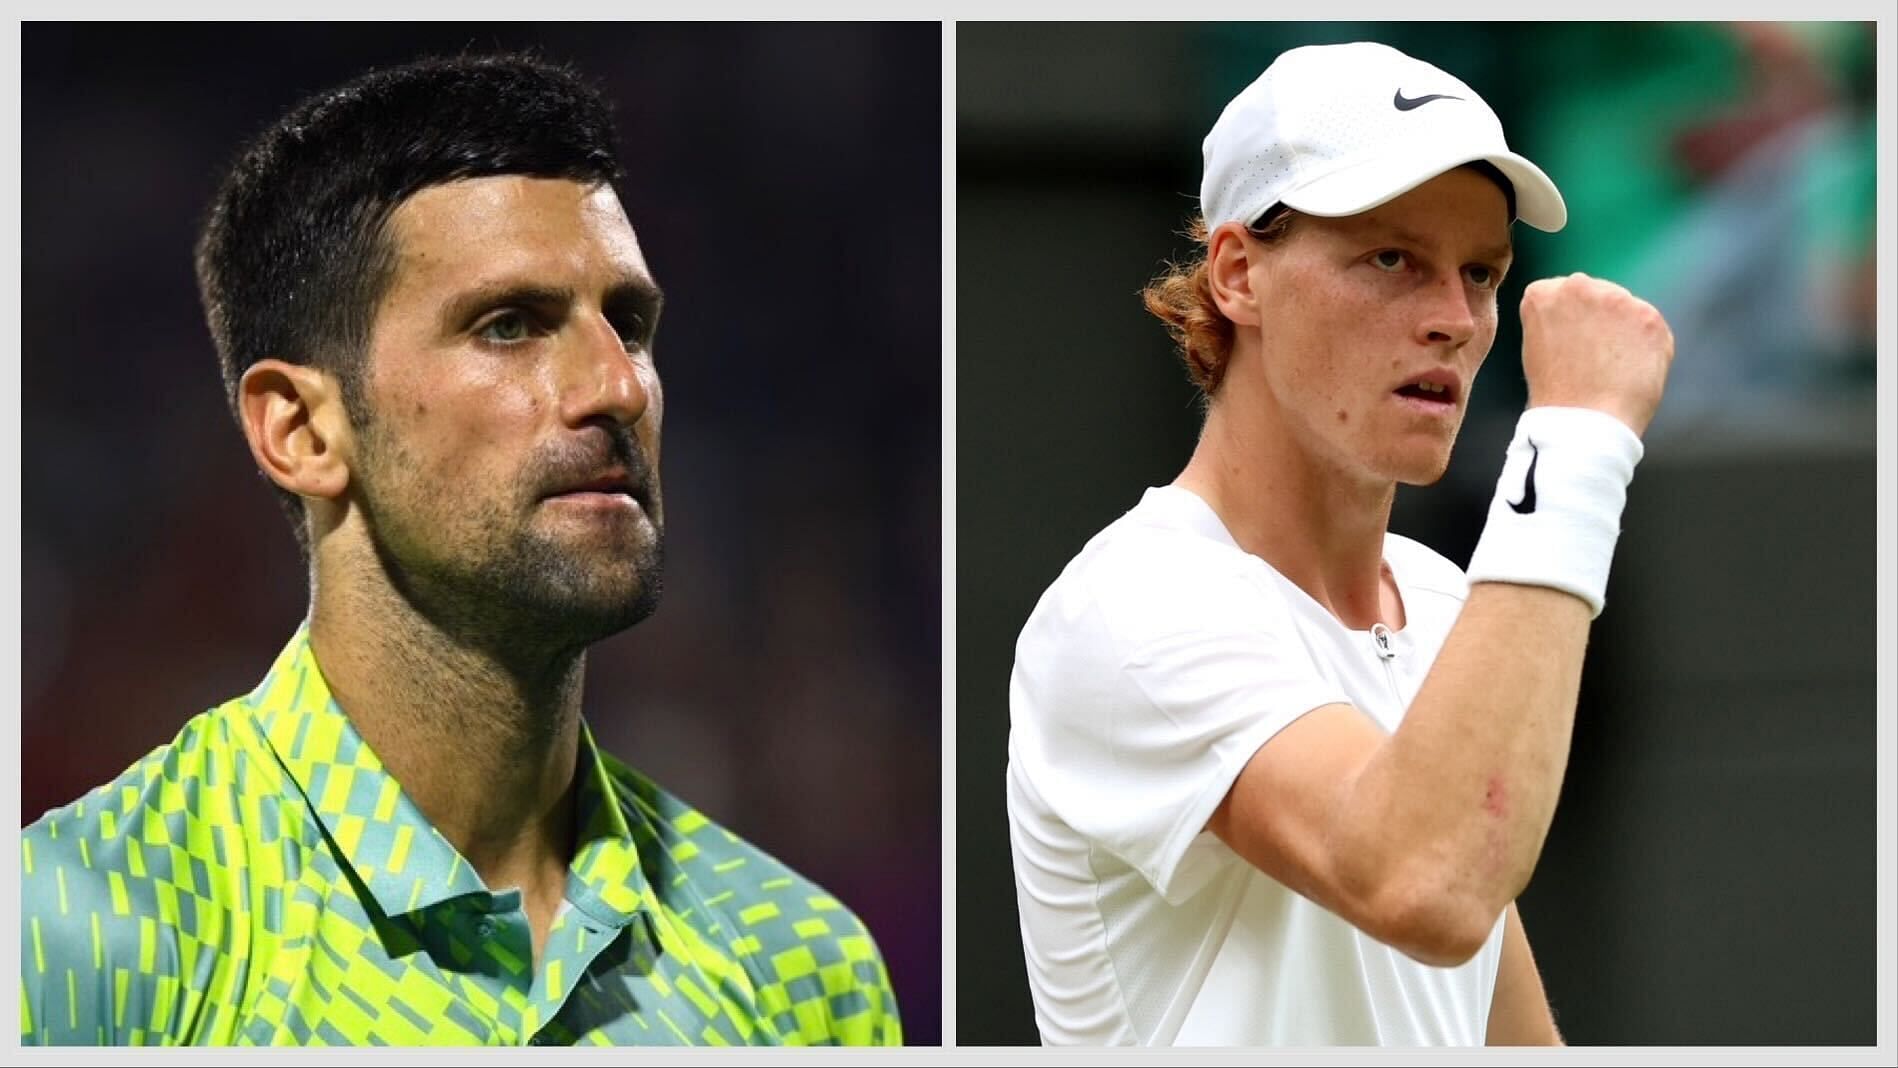 Novak Djokovic (left) lost to Jannik Sinner in the Australian Open semifinal on Friday.